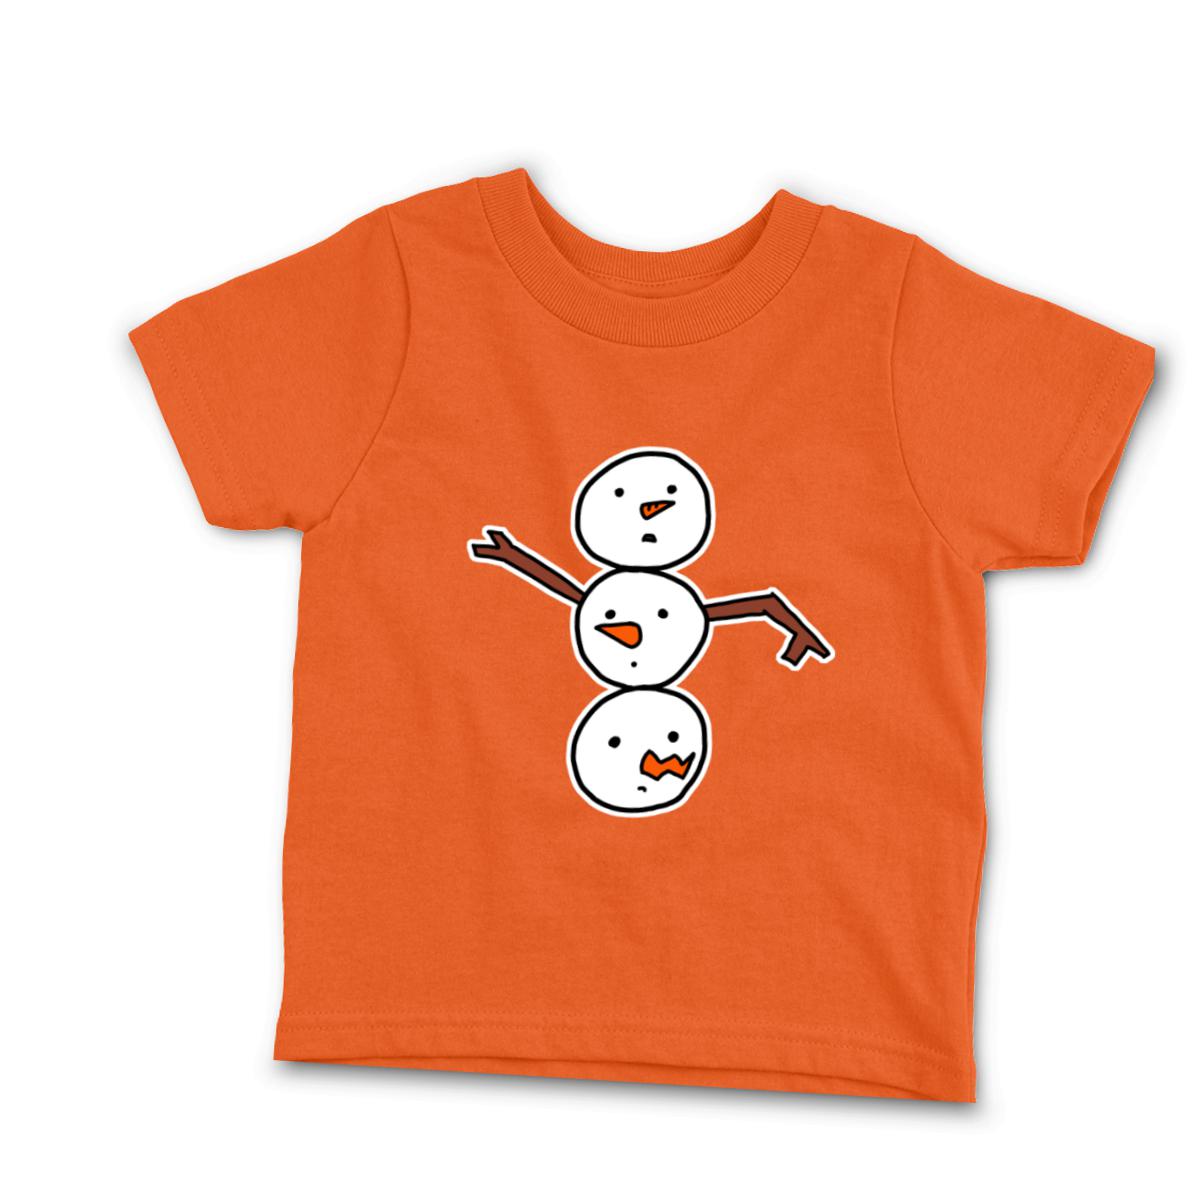 Snowman All Heads Toddler Tee 2T orange